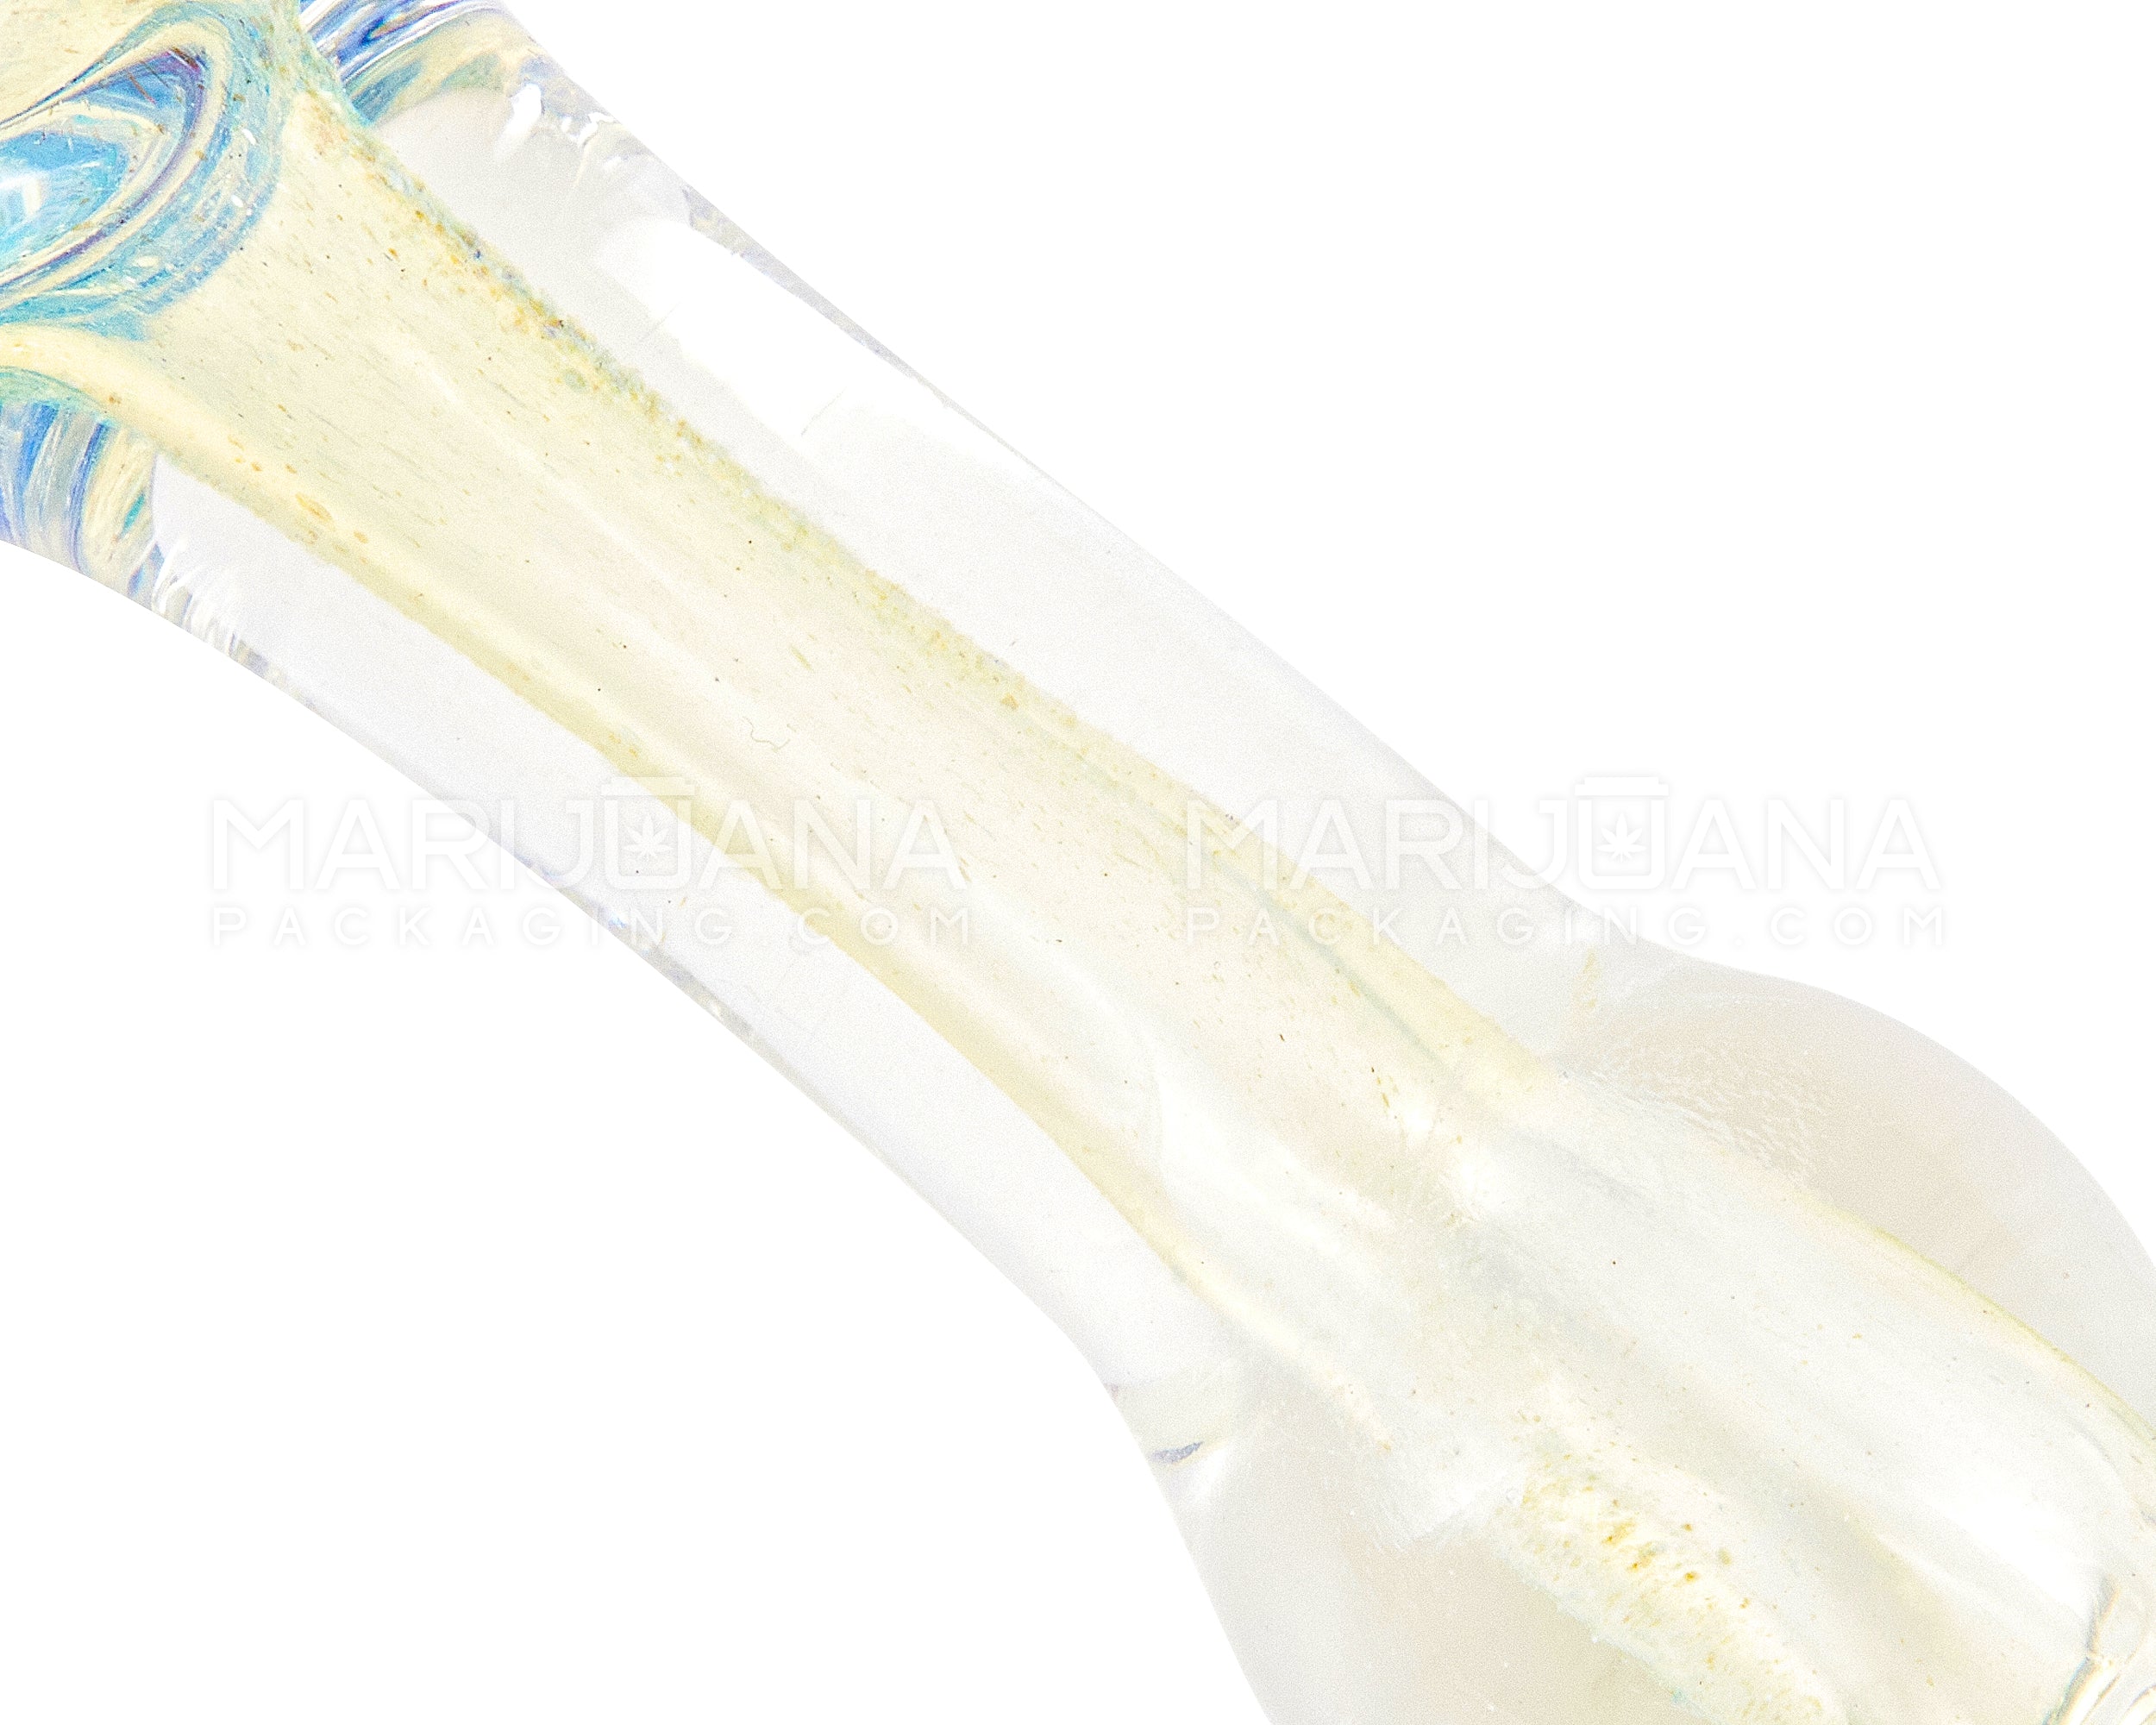 Frit & Fumed Spoon Hand Pipe w/ Swirls | 3.5in Long - Glass - Assorted